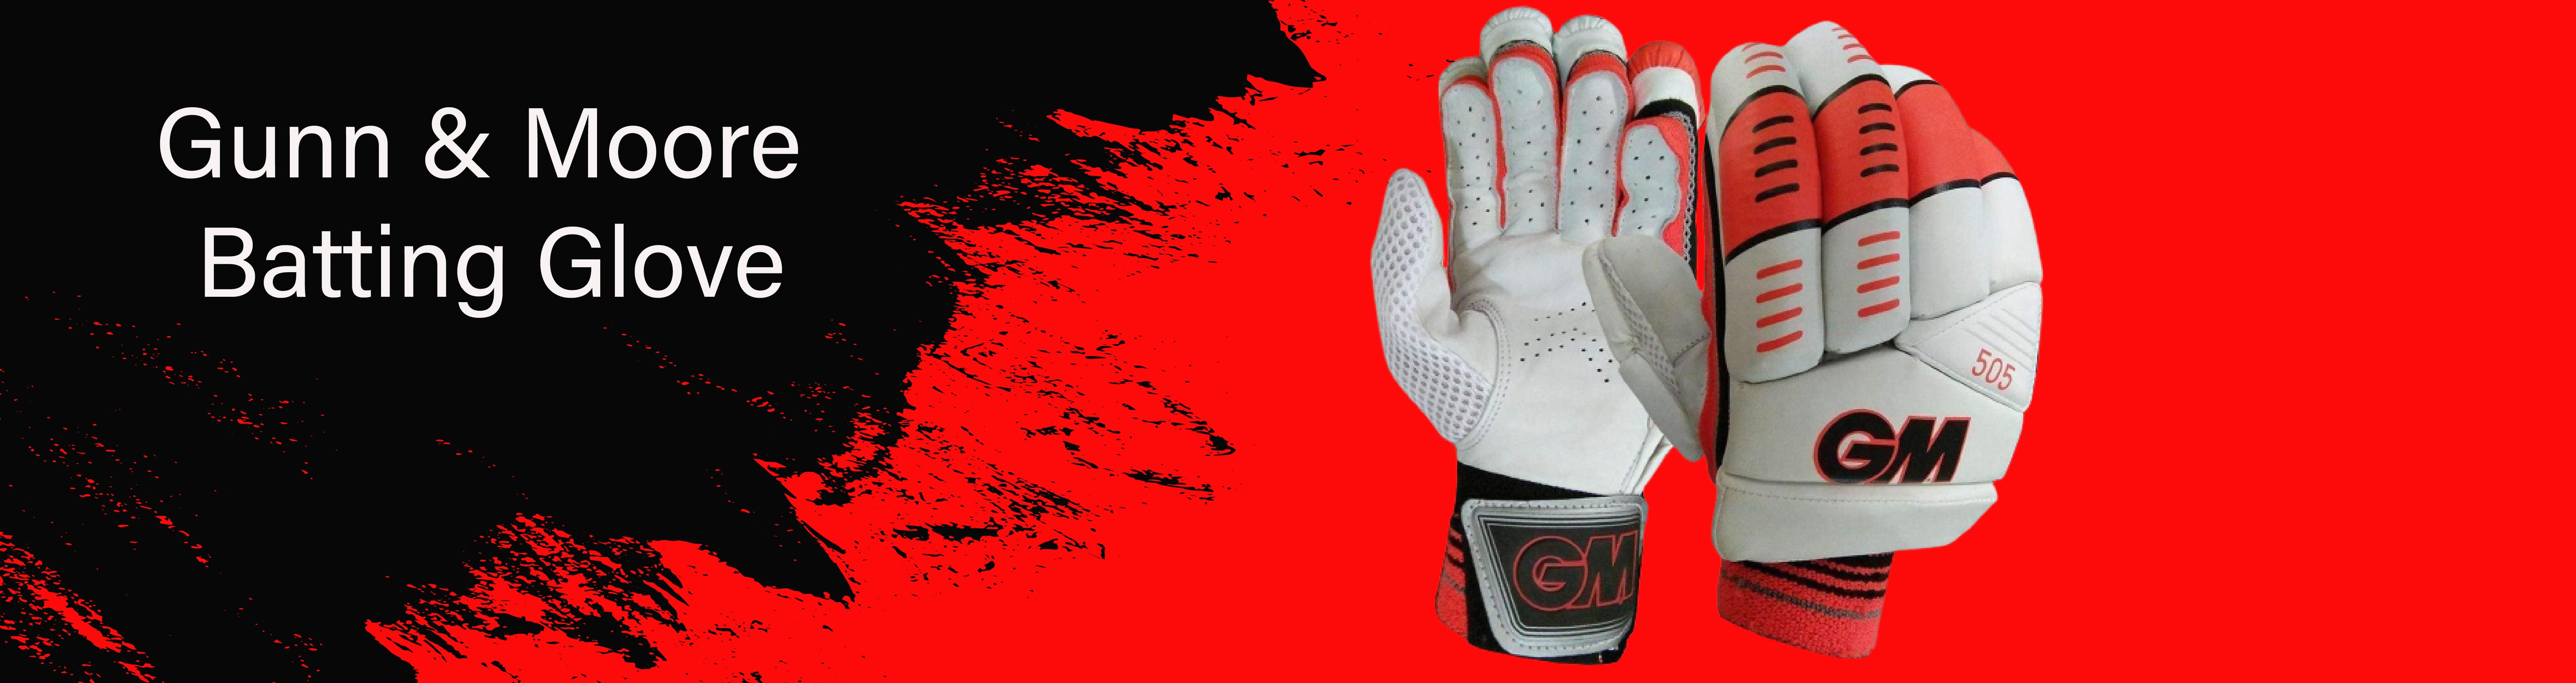 Collection Image Gunn & Moore Batting Glove